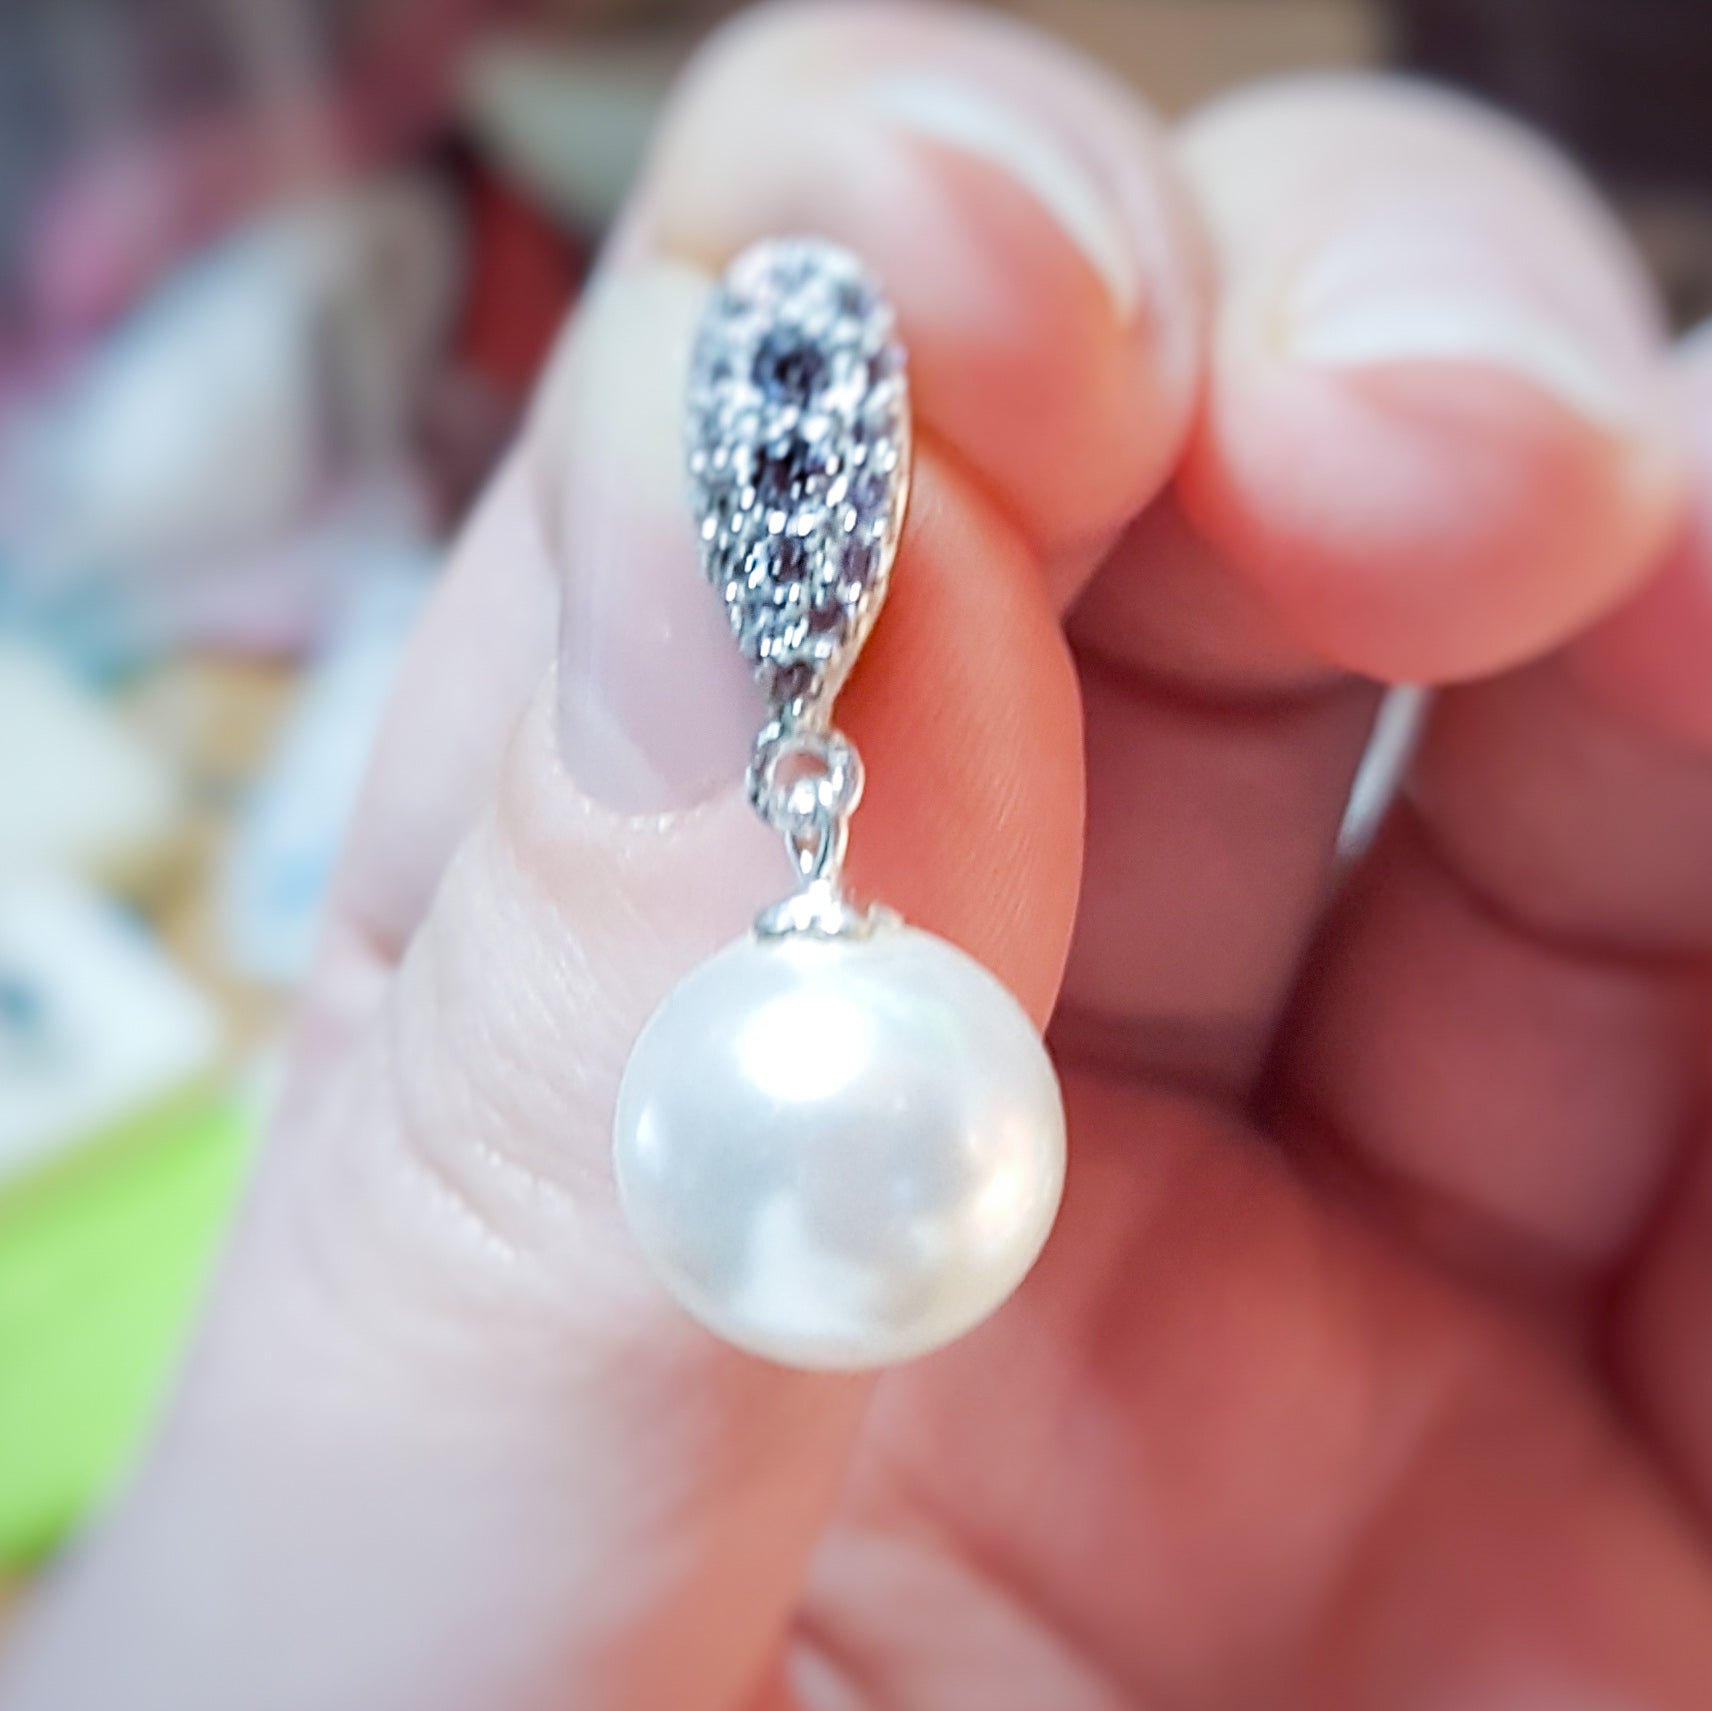 White pearl drop earrings - Personalised Sterling Silver Jewellery Ireland. Birthstone necklace. Shop Local Ireland - Ireland